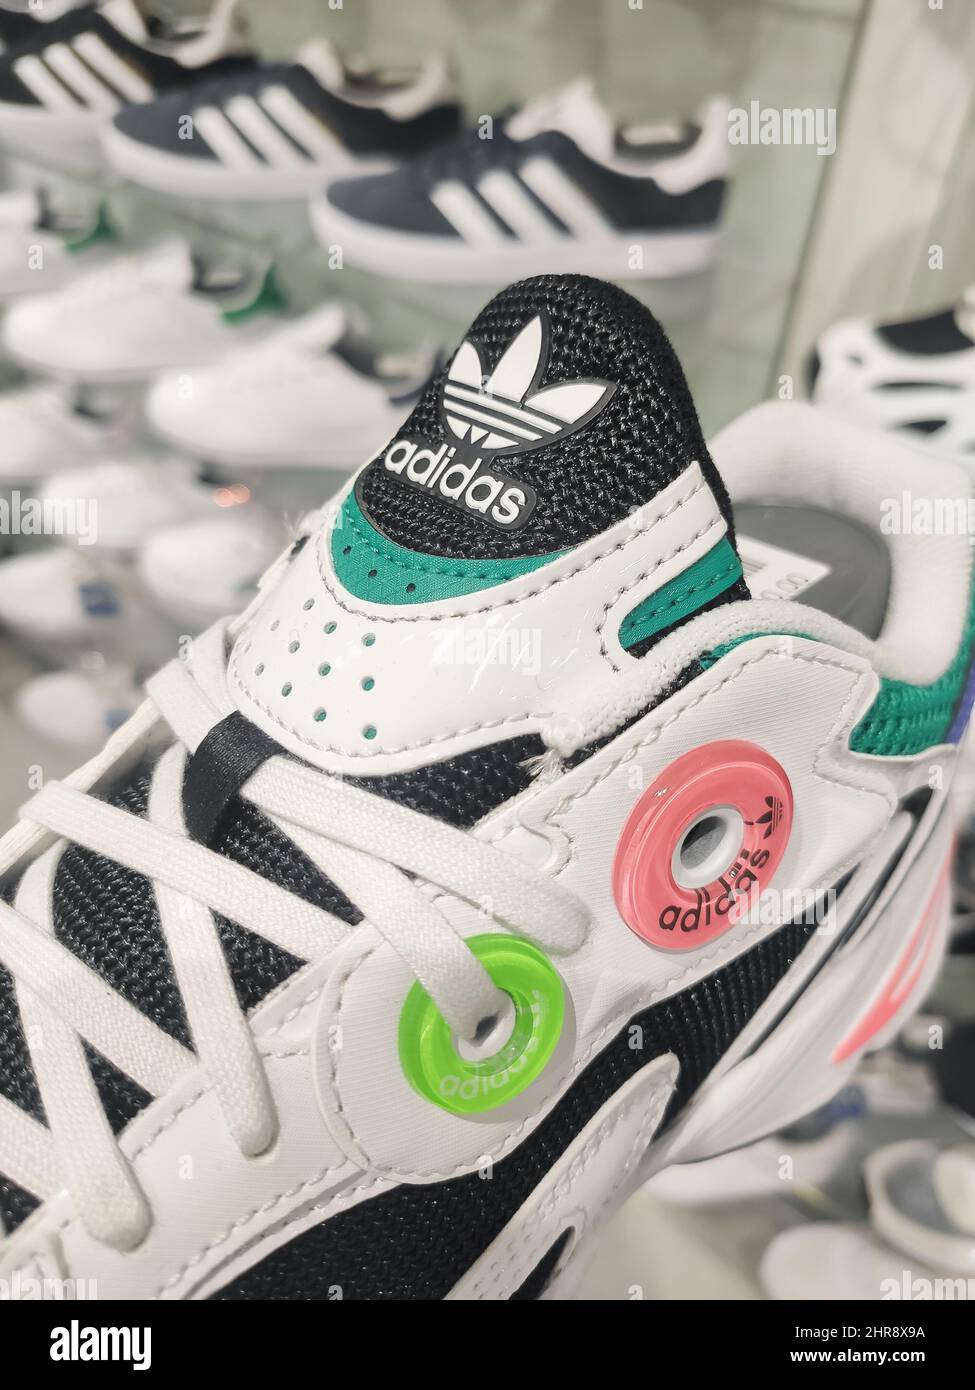 Adidas sneaker trainer Stock Photo - Alamy